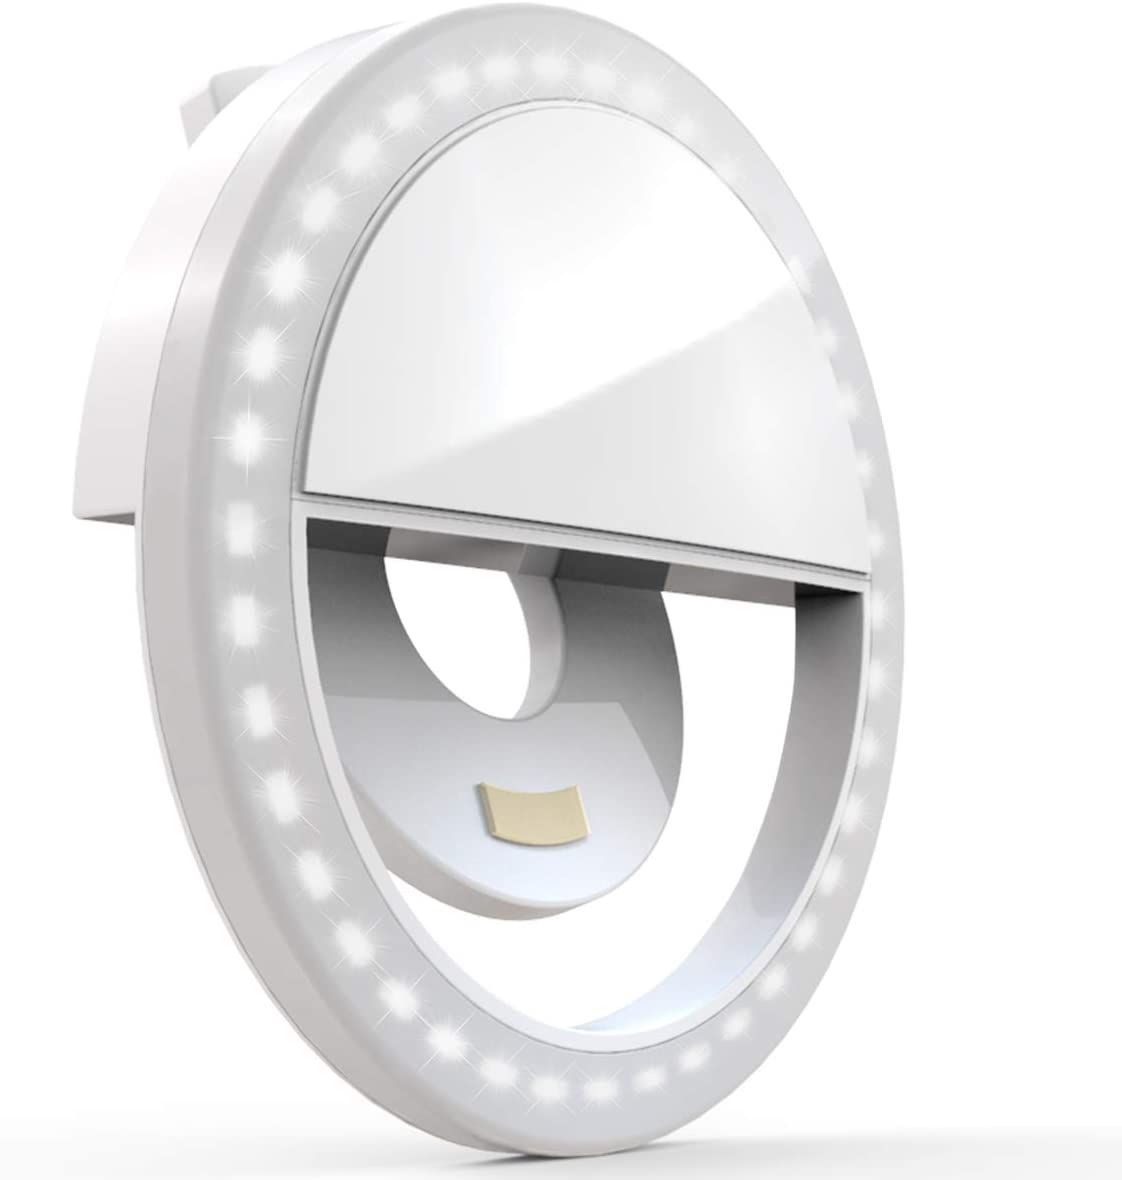 PBI Auxiwa Clip on Selfie Ring Light